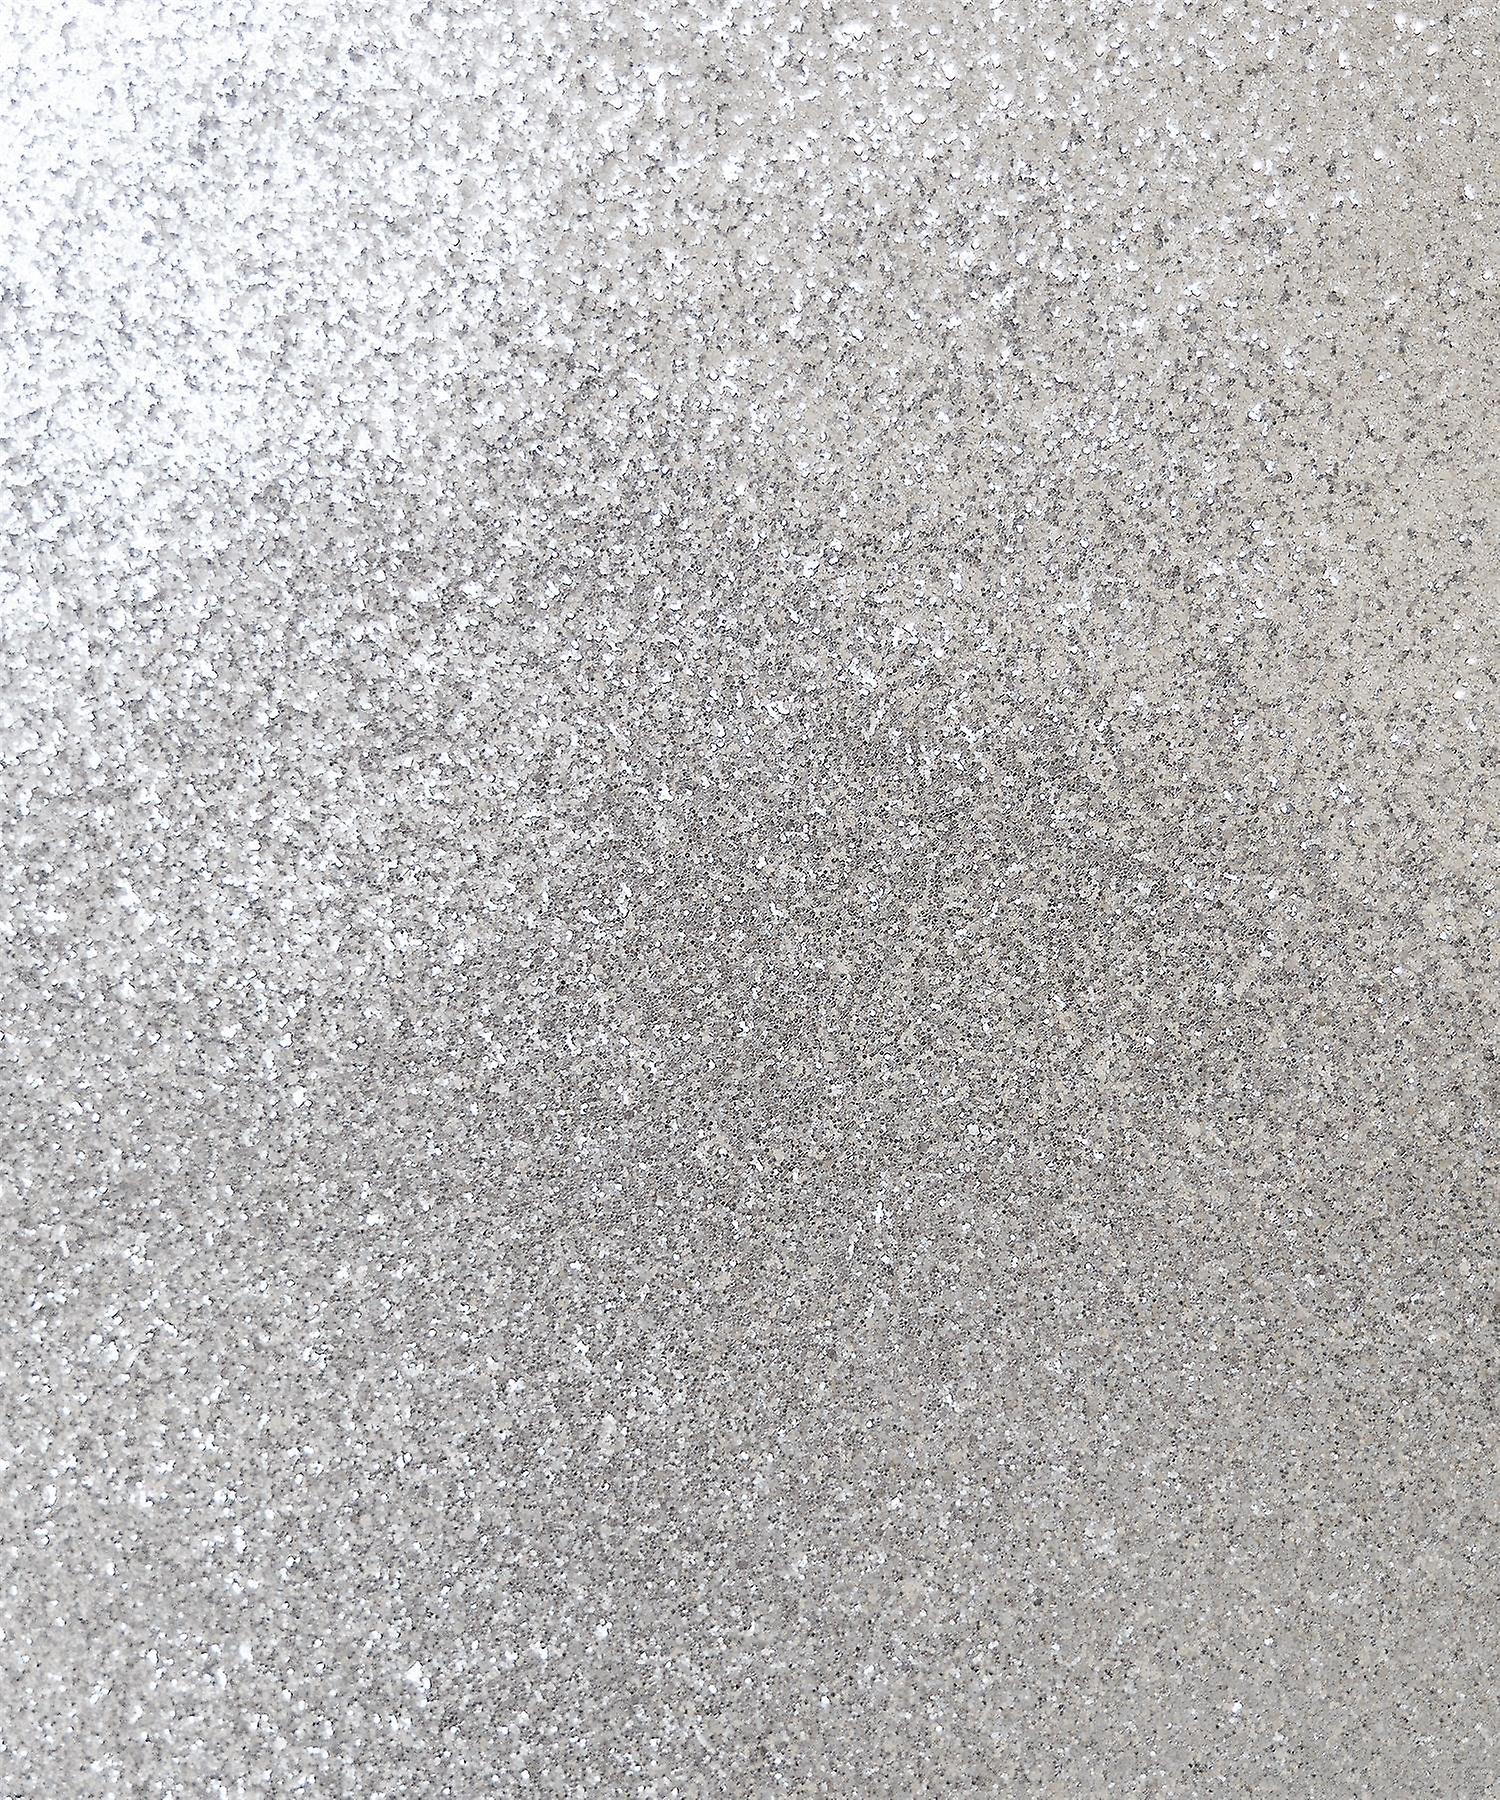 Sequin sparkle silver wallpaper glitter metallic shimmer textured arthouse